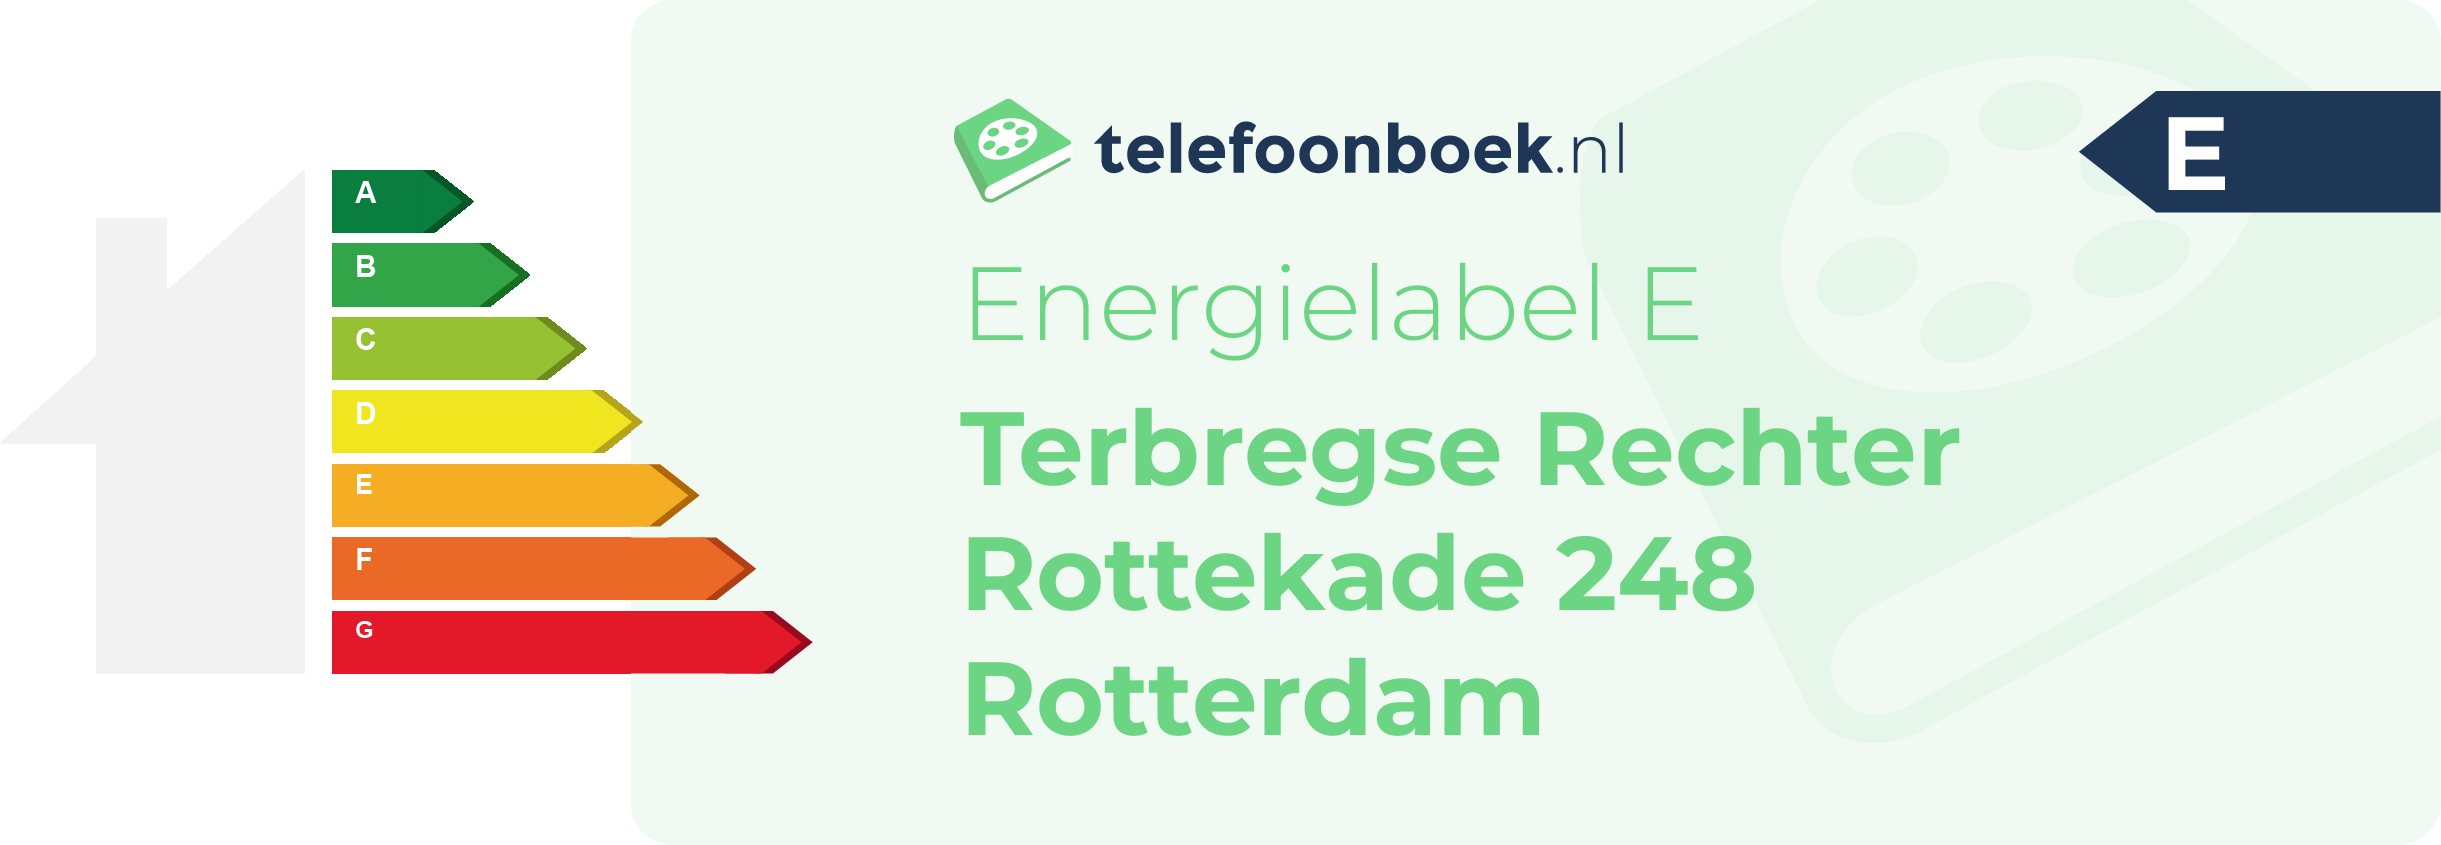 Energielabel Terbregse Rechter Rottekade 248 Rotterdam